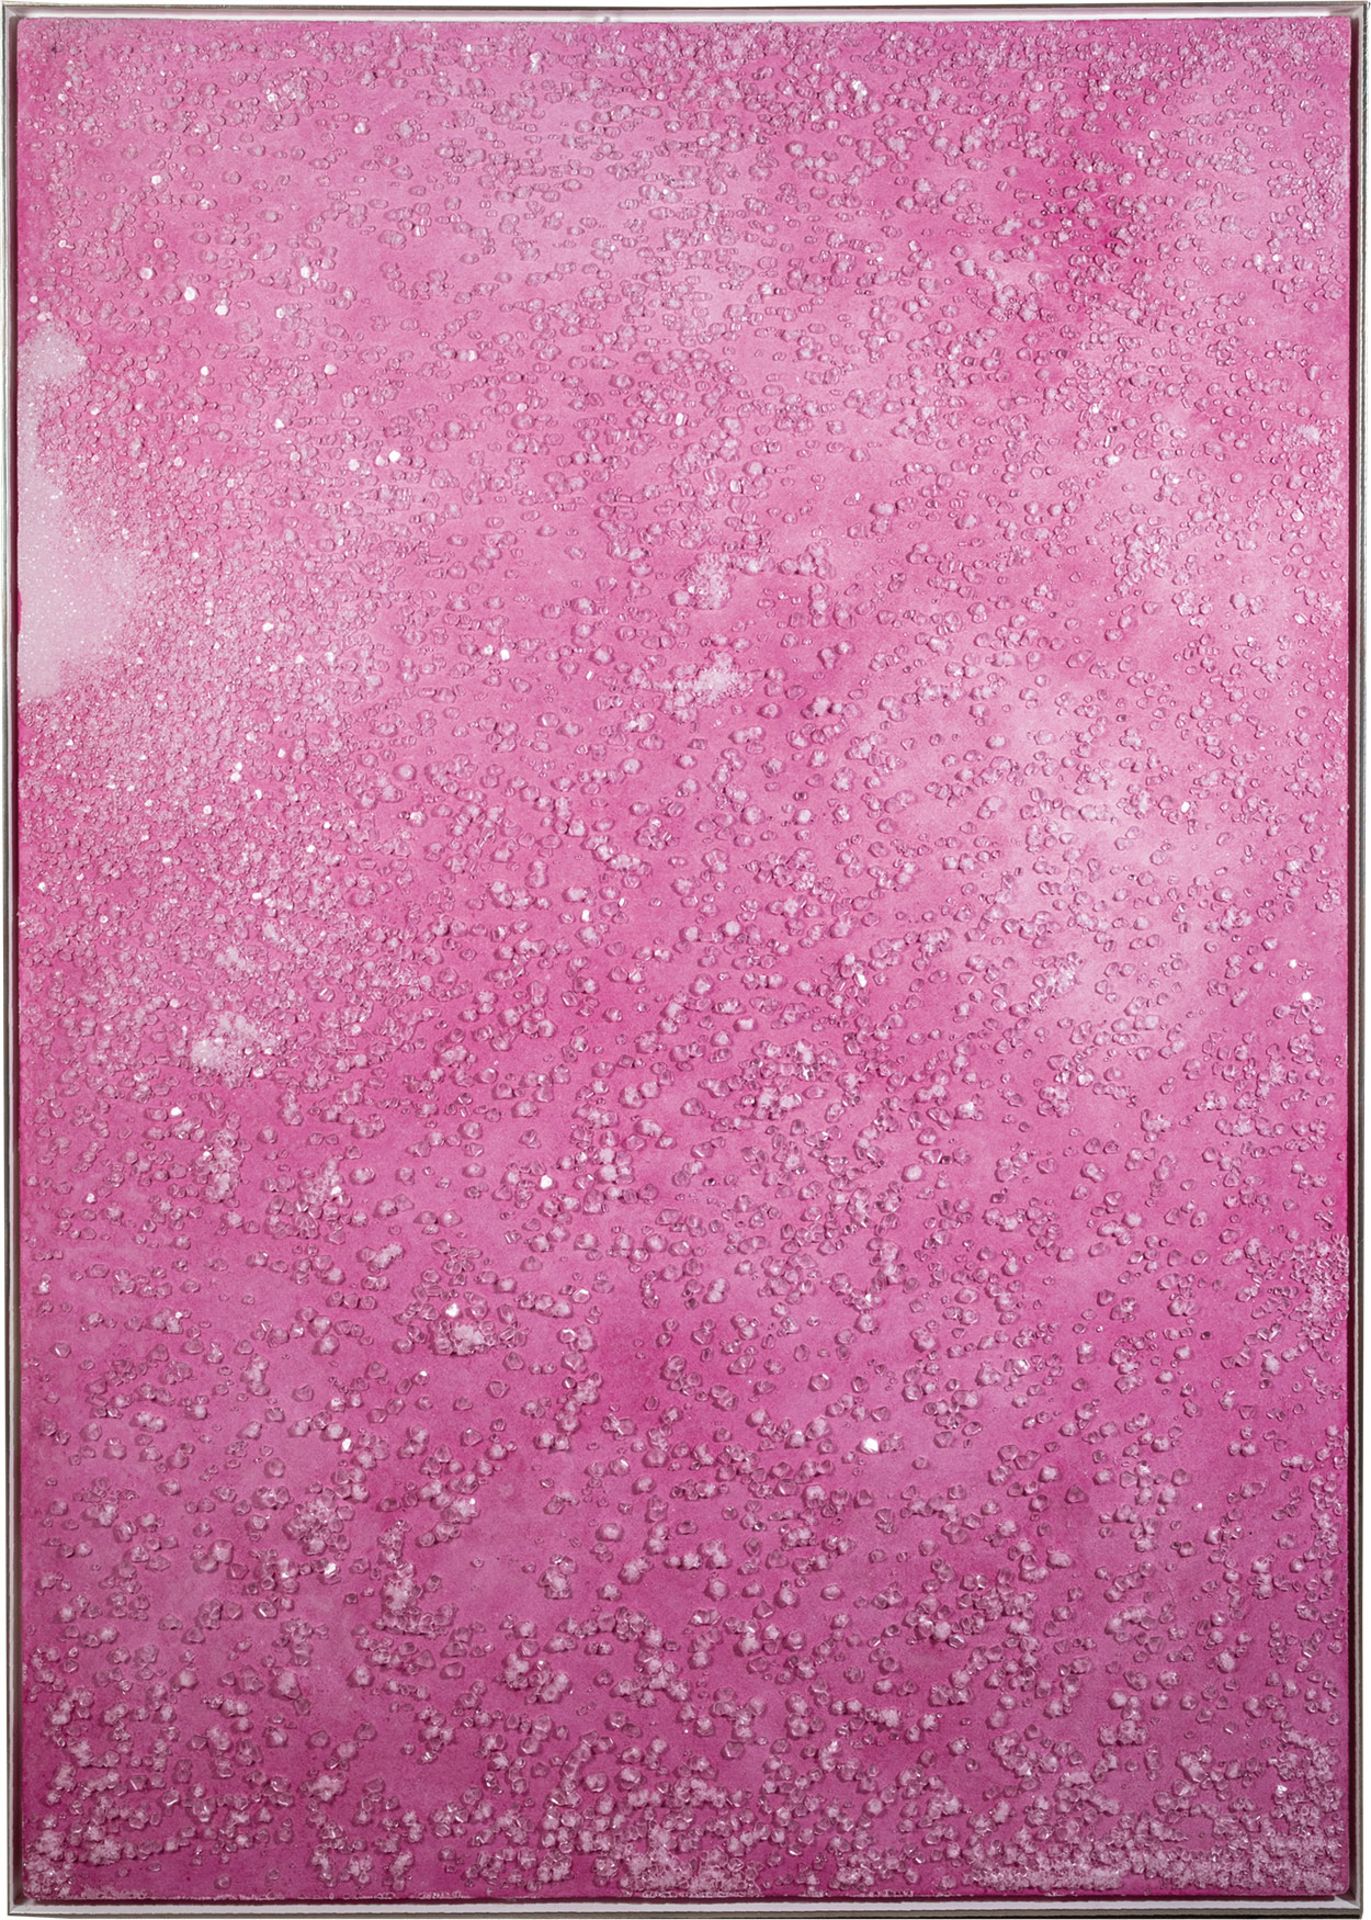 ''Pink 1820'' ( Objectivism Art 49°39'58.4''N 8°40'54.9''E )